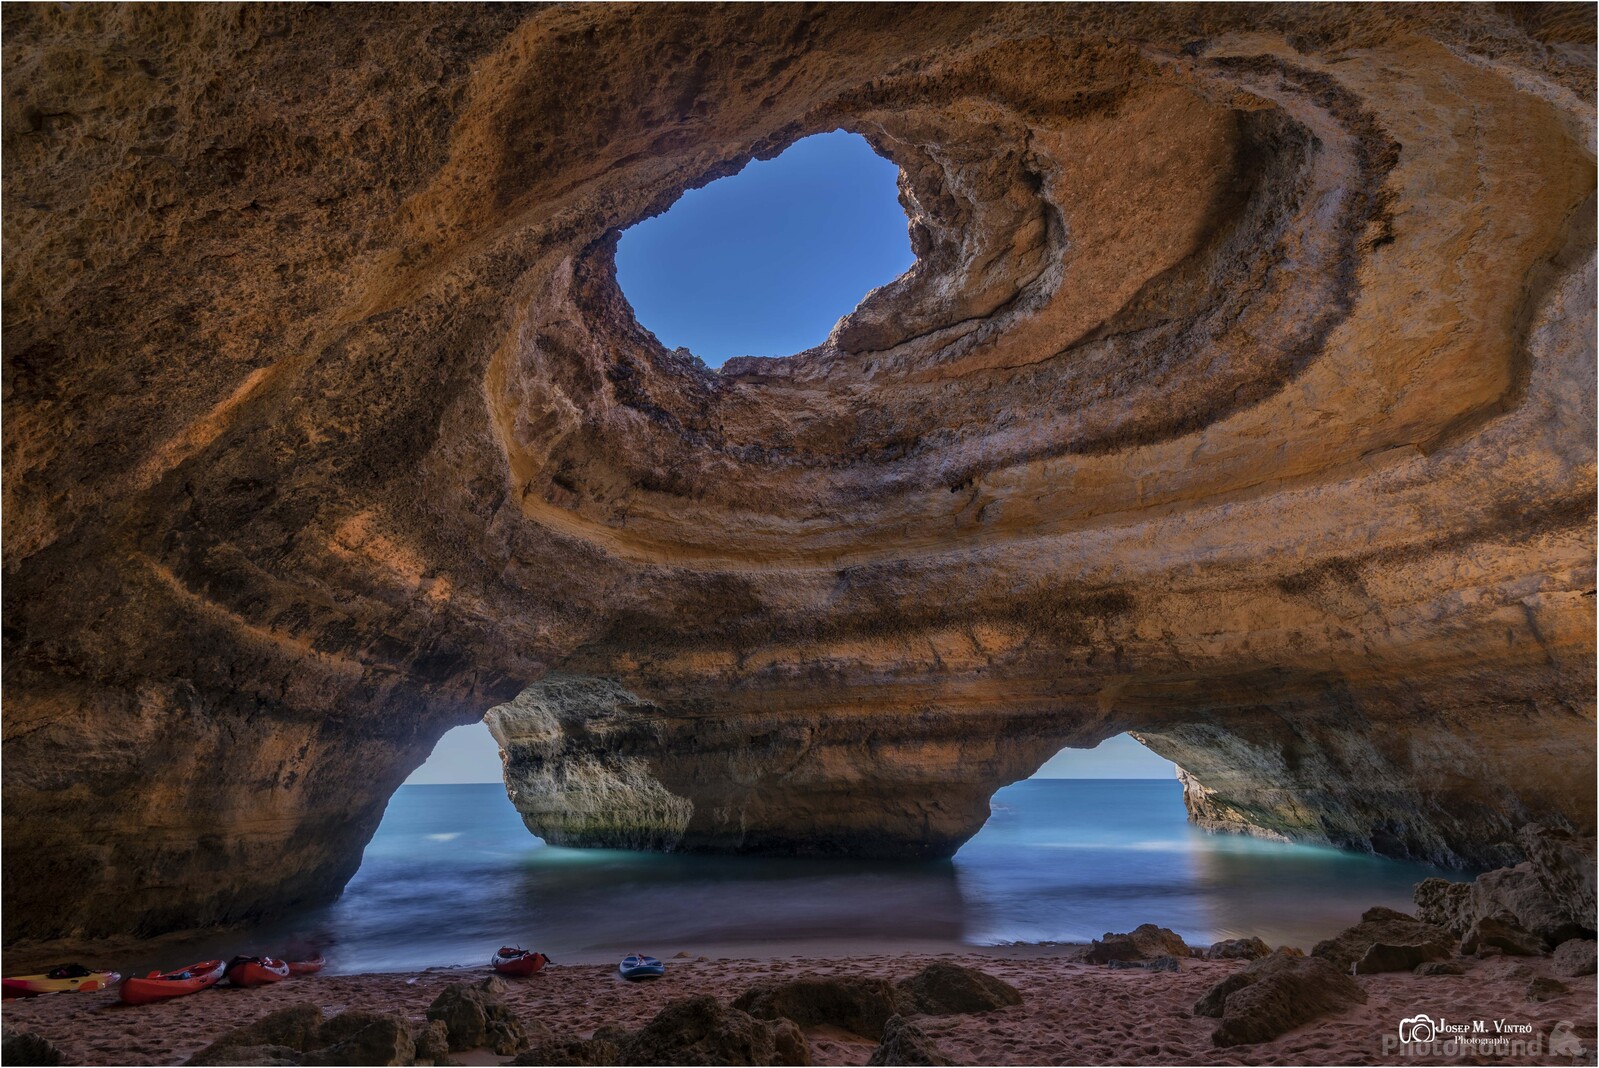 Image of Benagil Cave, Algarve, Portugal by Josep Mª Vintró Alegret